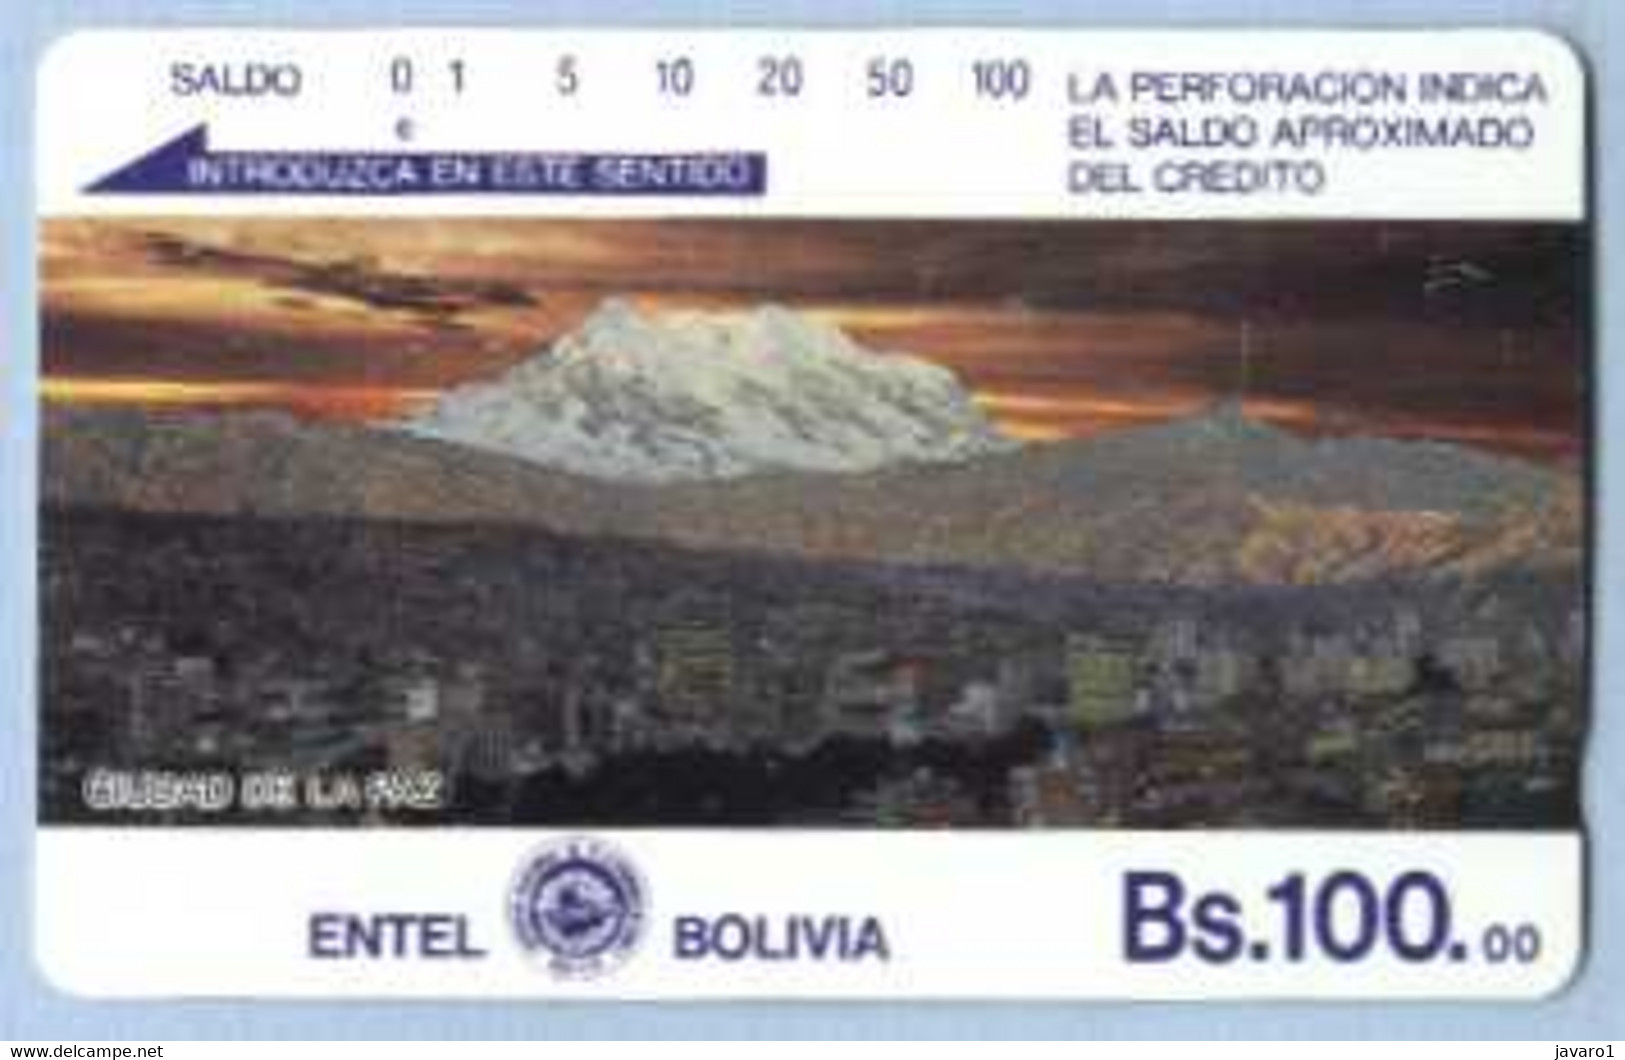 BOLIVIA : BOLTE09 Bs 100 La Paz               /Brown Rev. MINT - Bolivia